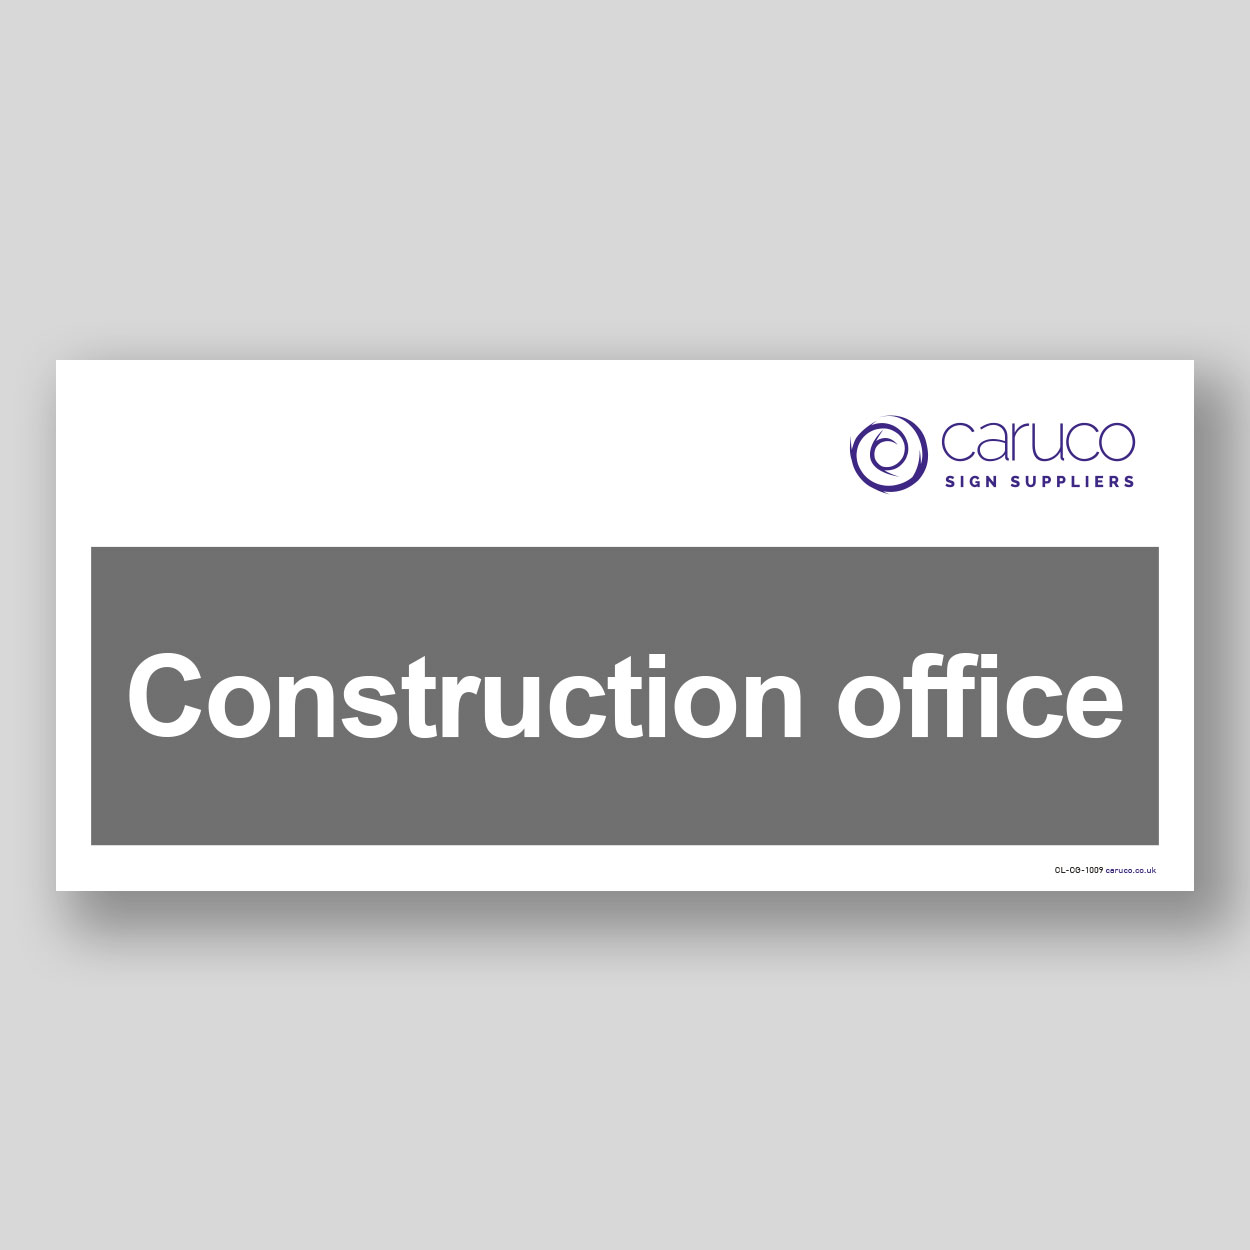 CL-CG-1009 Construction office